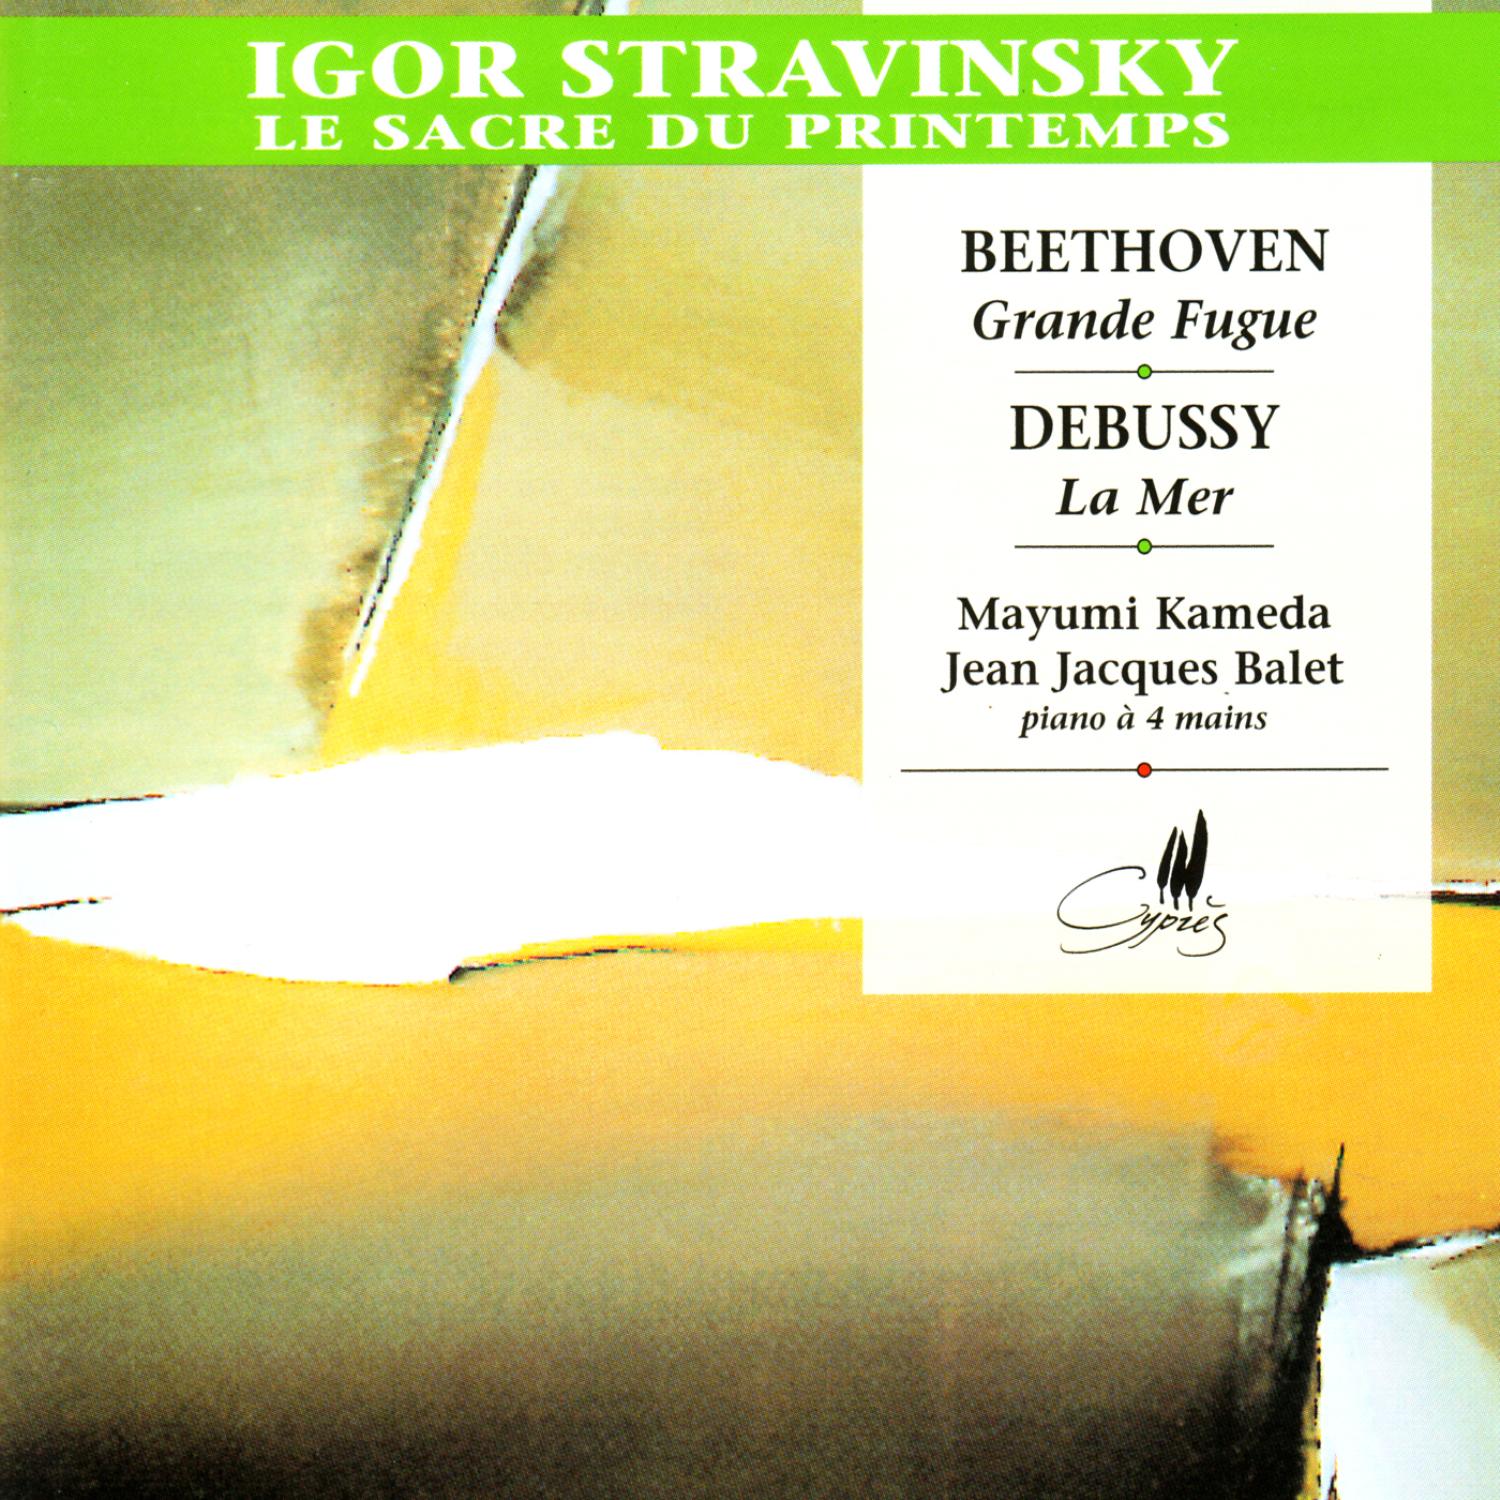 Stravinsky: Le Sacre du Printemps - Beethoven: Grande Fugue, et al.